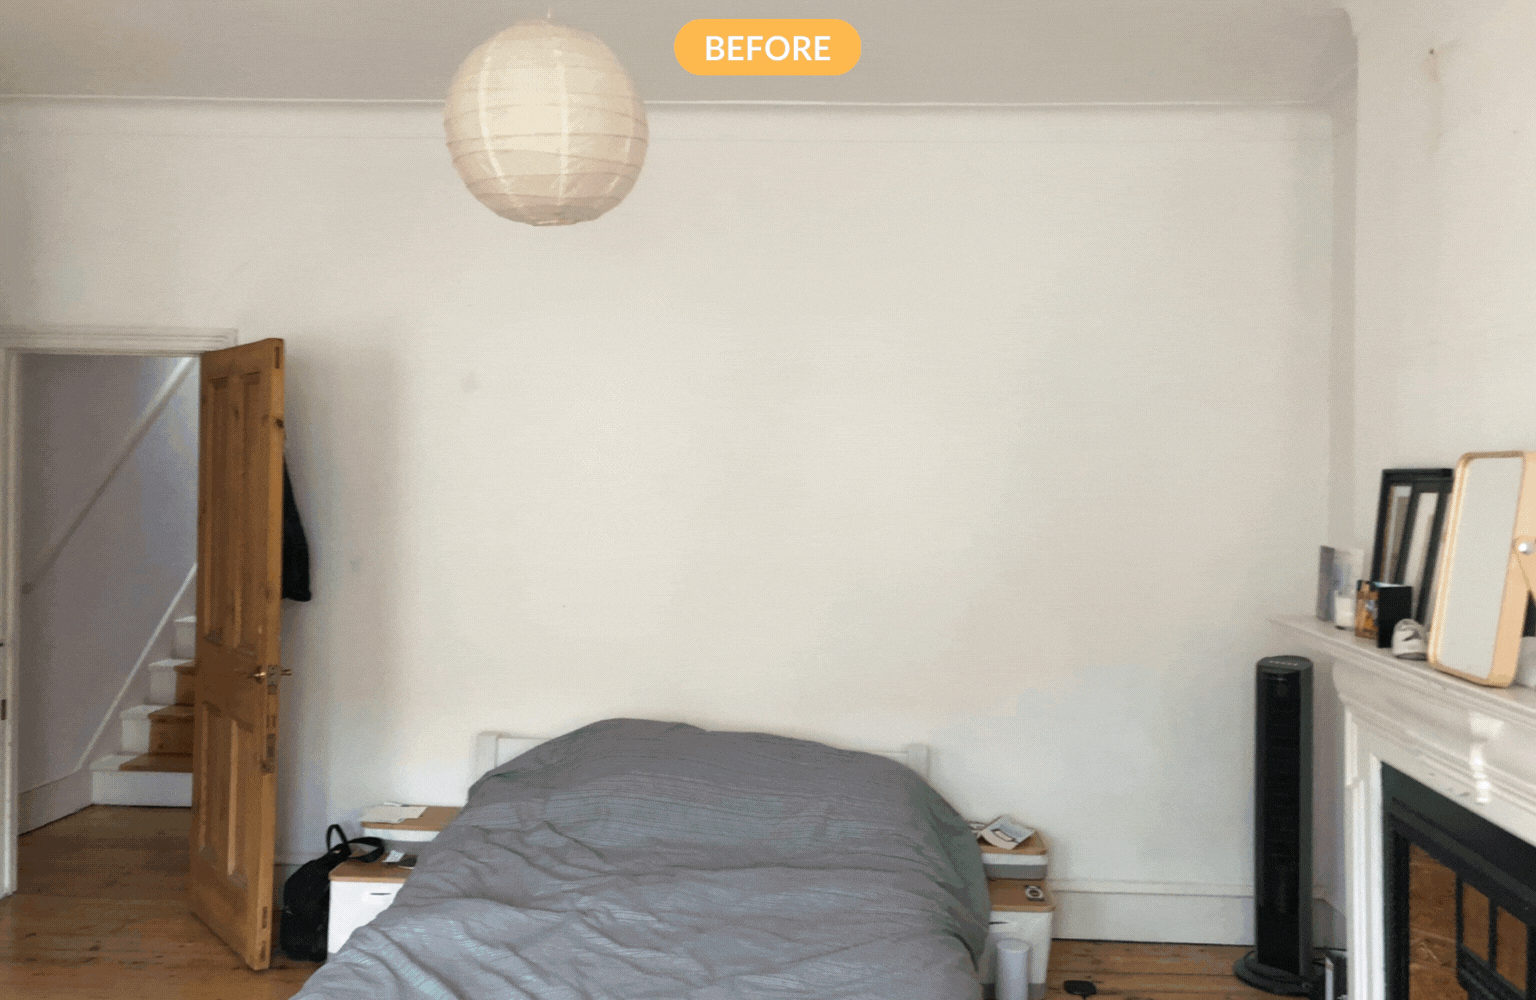 Sophisticated and elegant master bedroom transformation